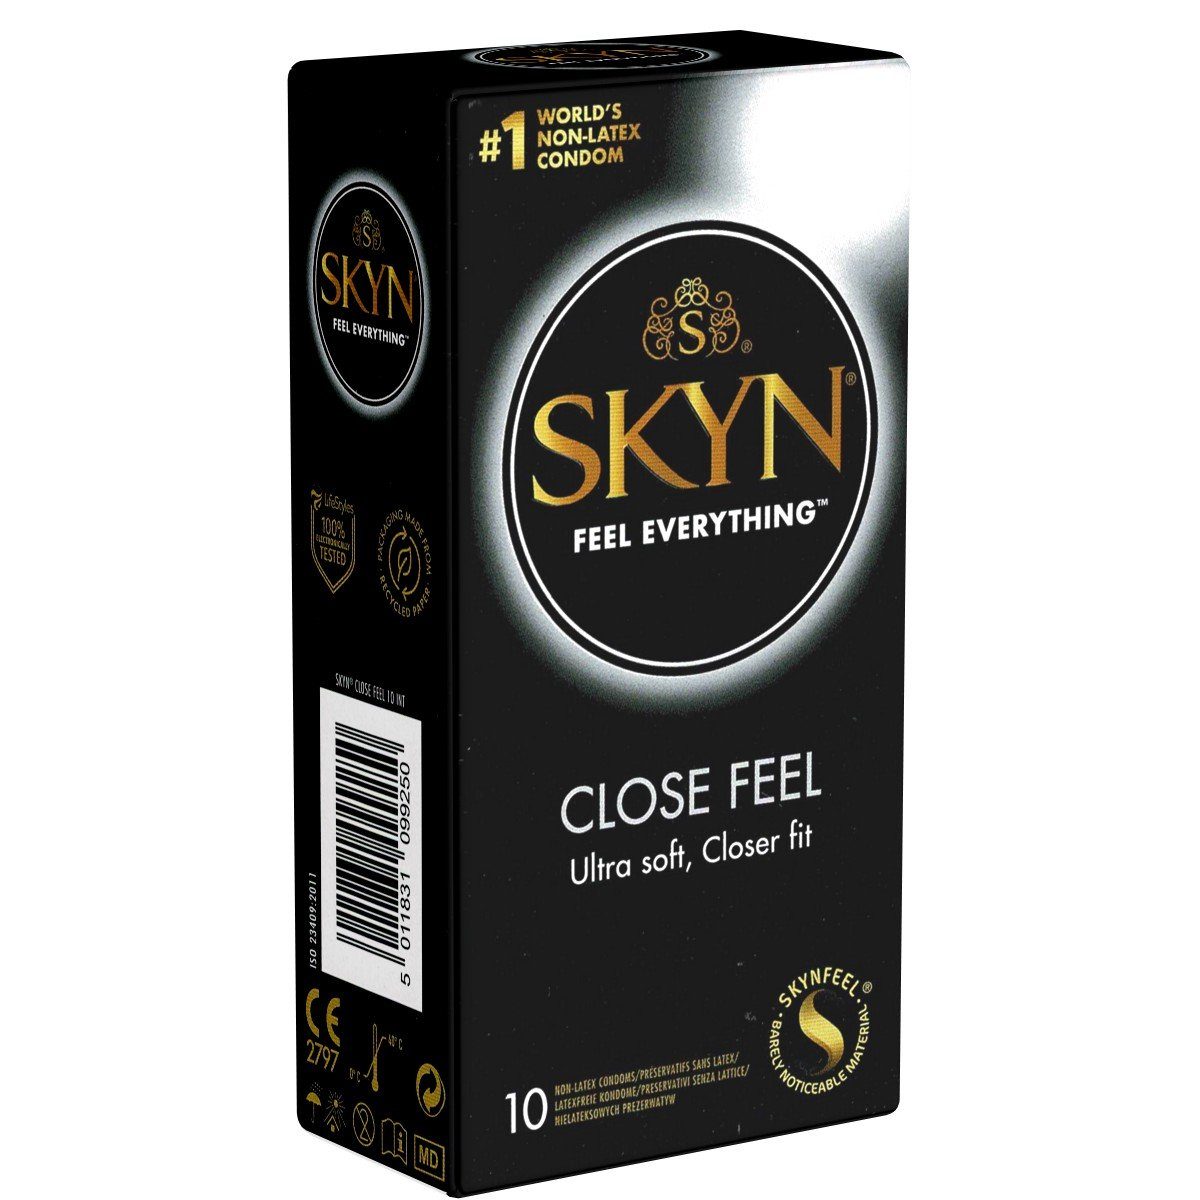 (Ultra Sensoprène™ enge Close 10 aus latexfreie mit, SKYN Kondome Closer Fit) Feel St., Soft, Kondome Packung